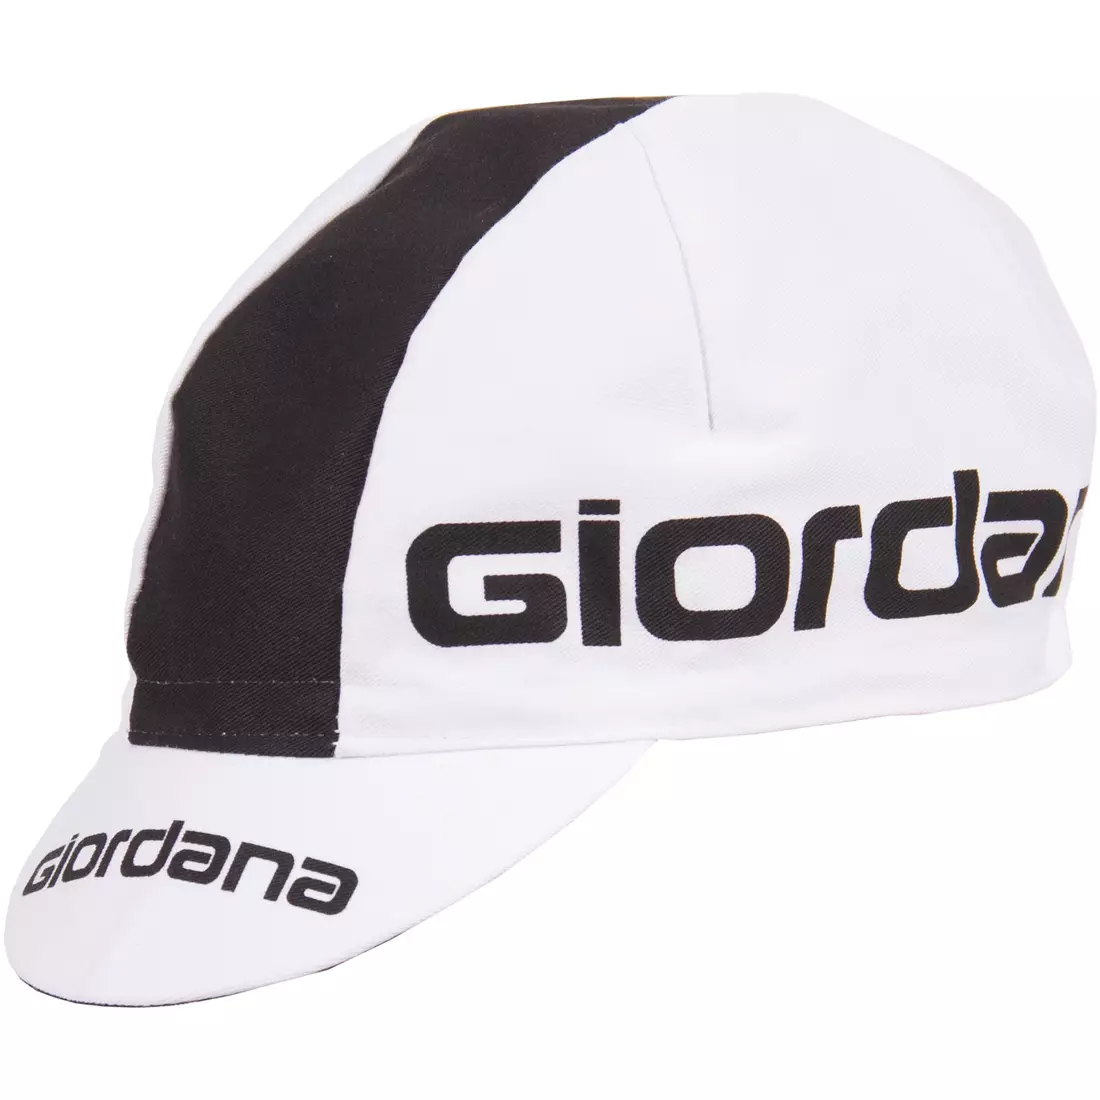 GIORDANA SS18 kerékpáros sapka - Giordana logó - fehér/fekete GI-S5-COCA-GIOR-WTBK egy méret